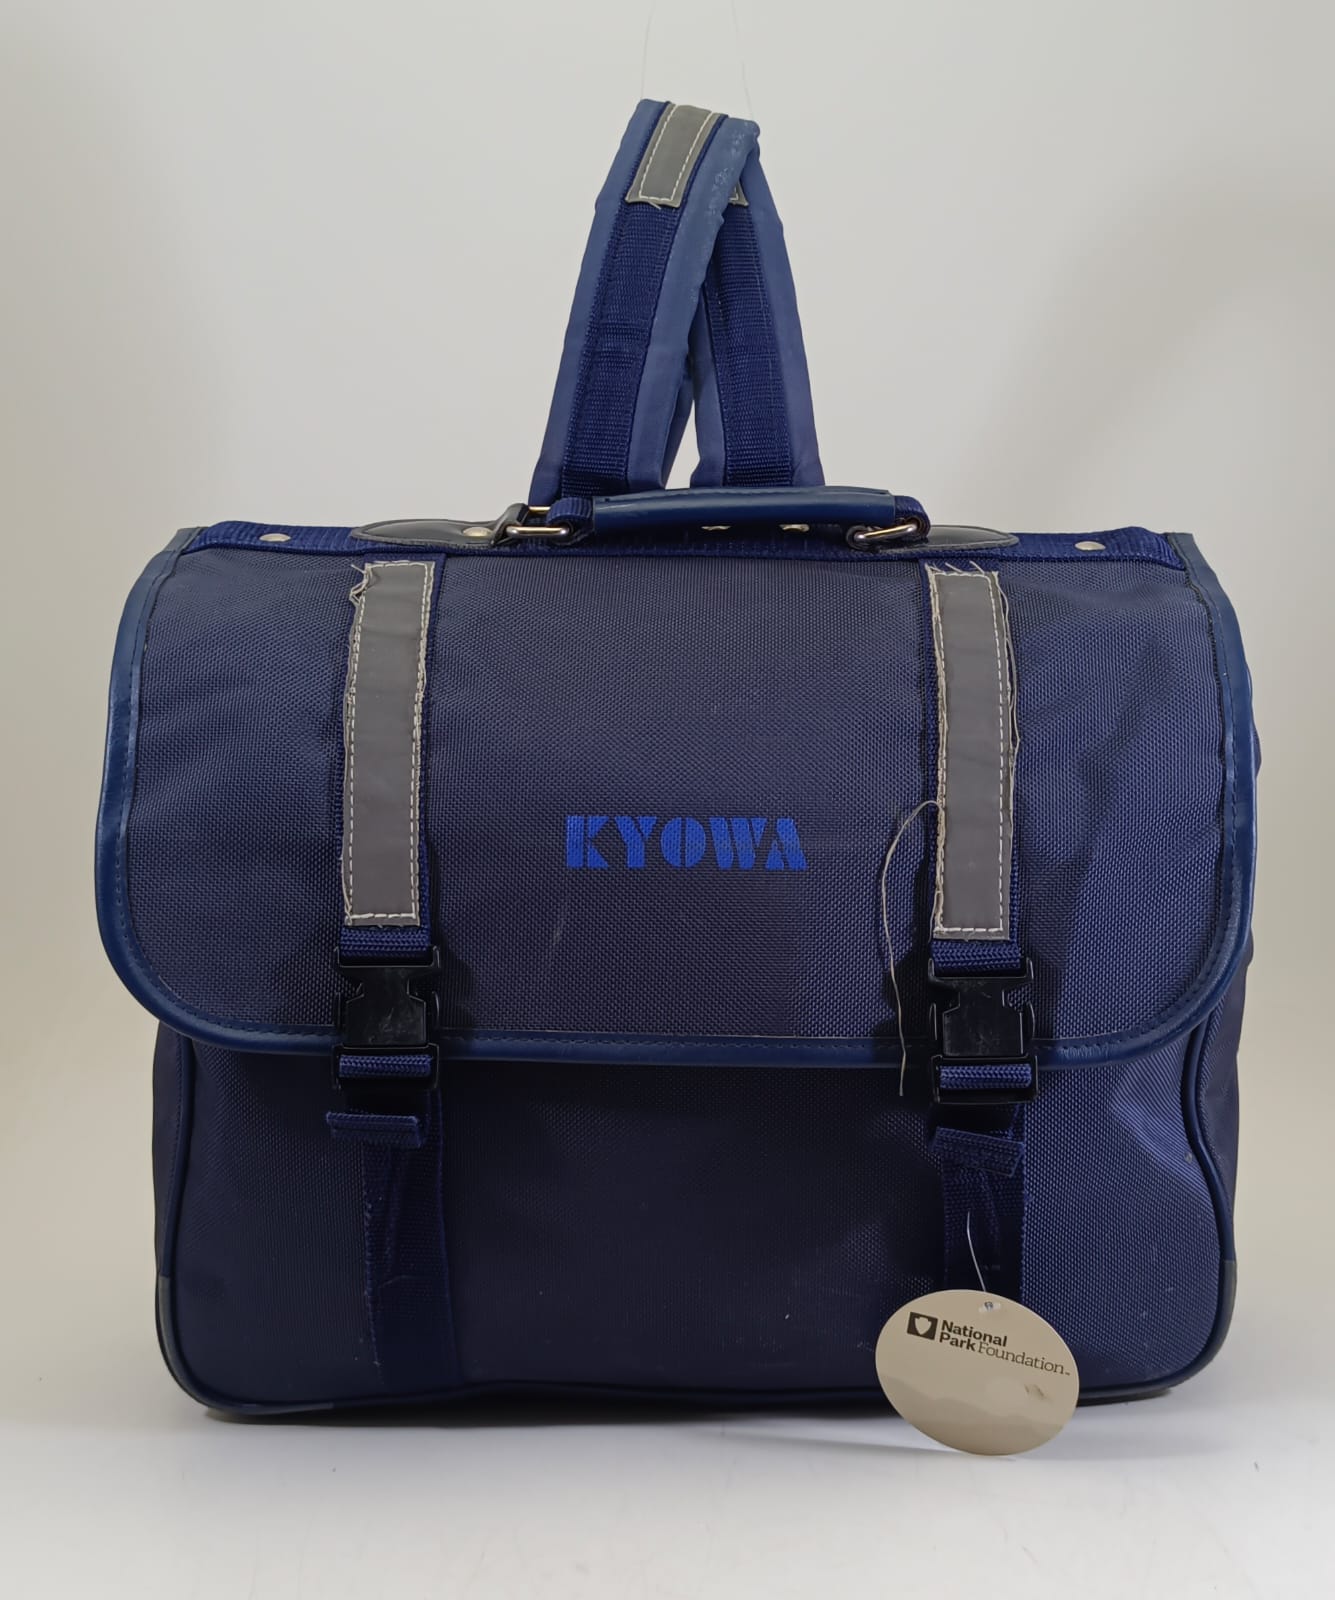 Kyowa blue School Bag